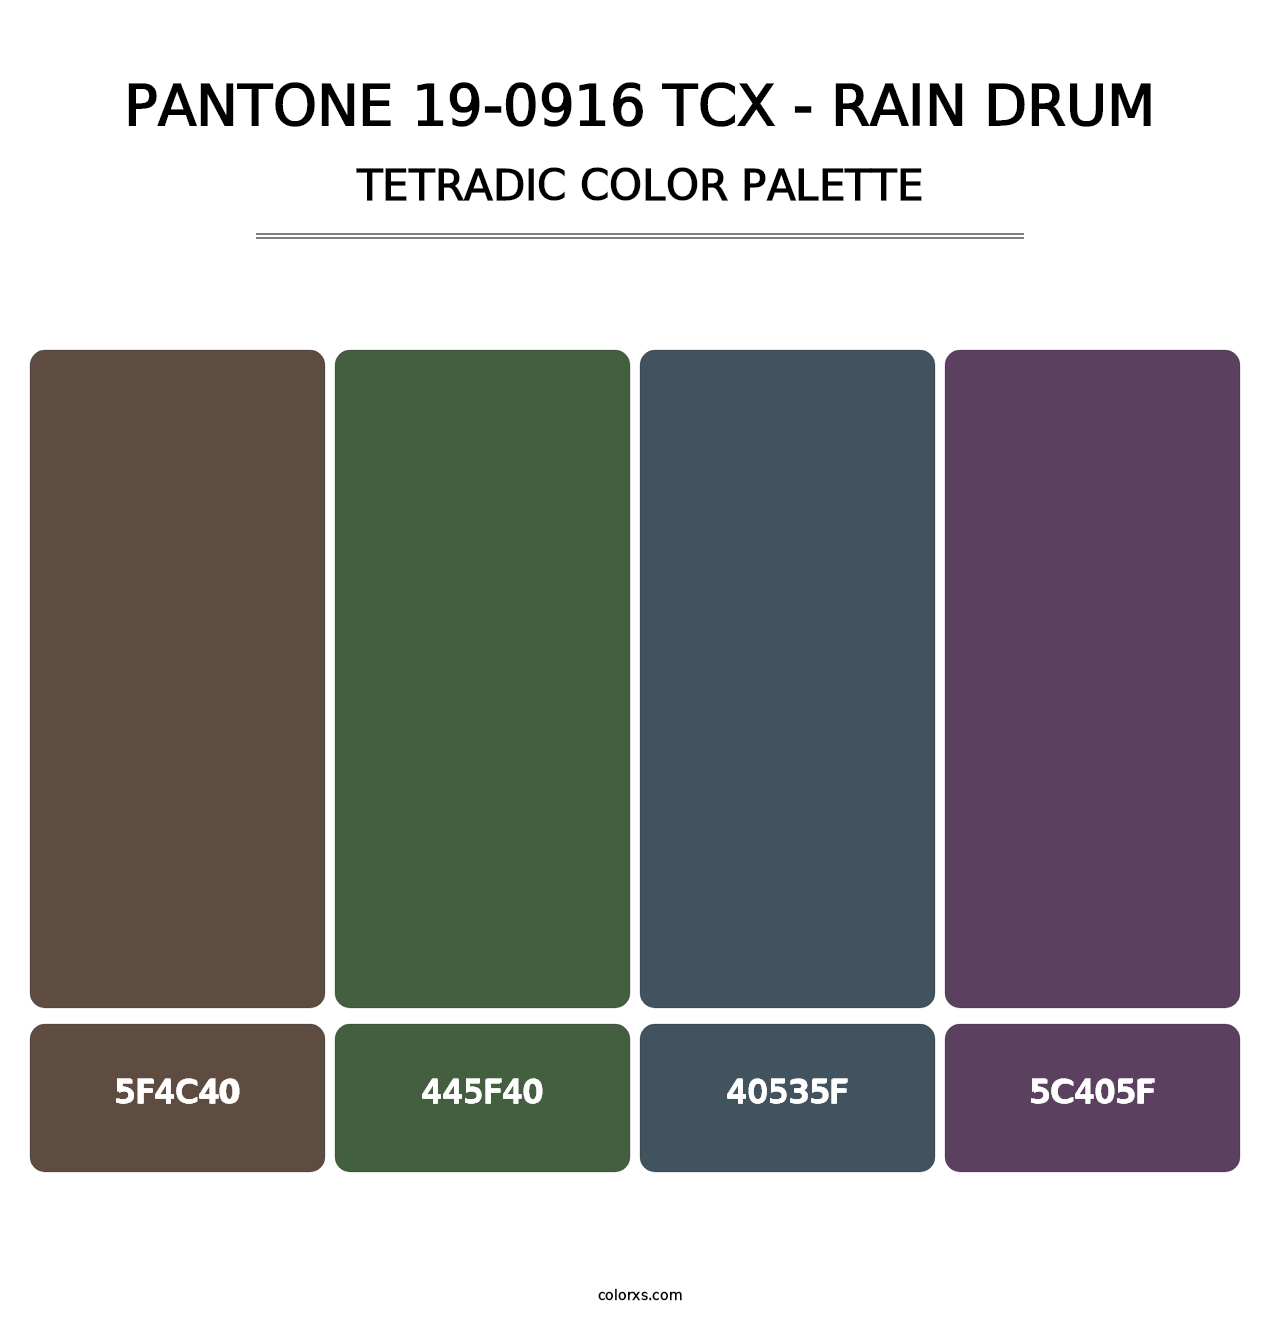 PANTONE 19-0916 TCX - Rain Drum - Tetradic Color Palette